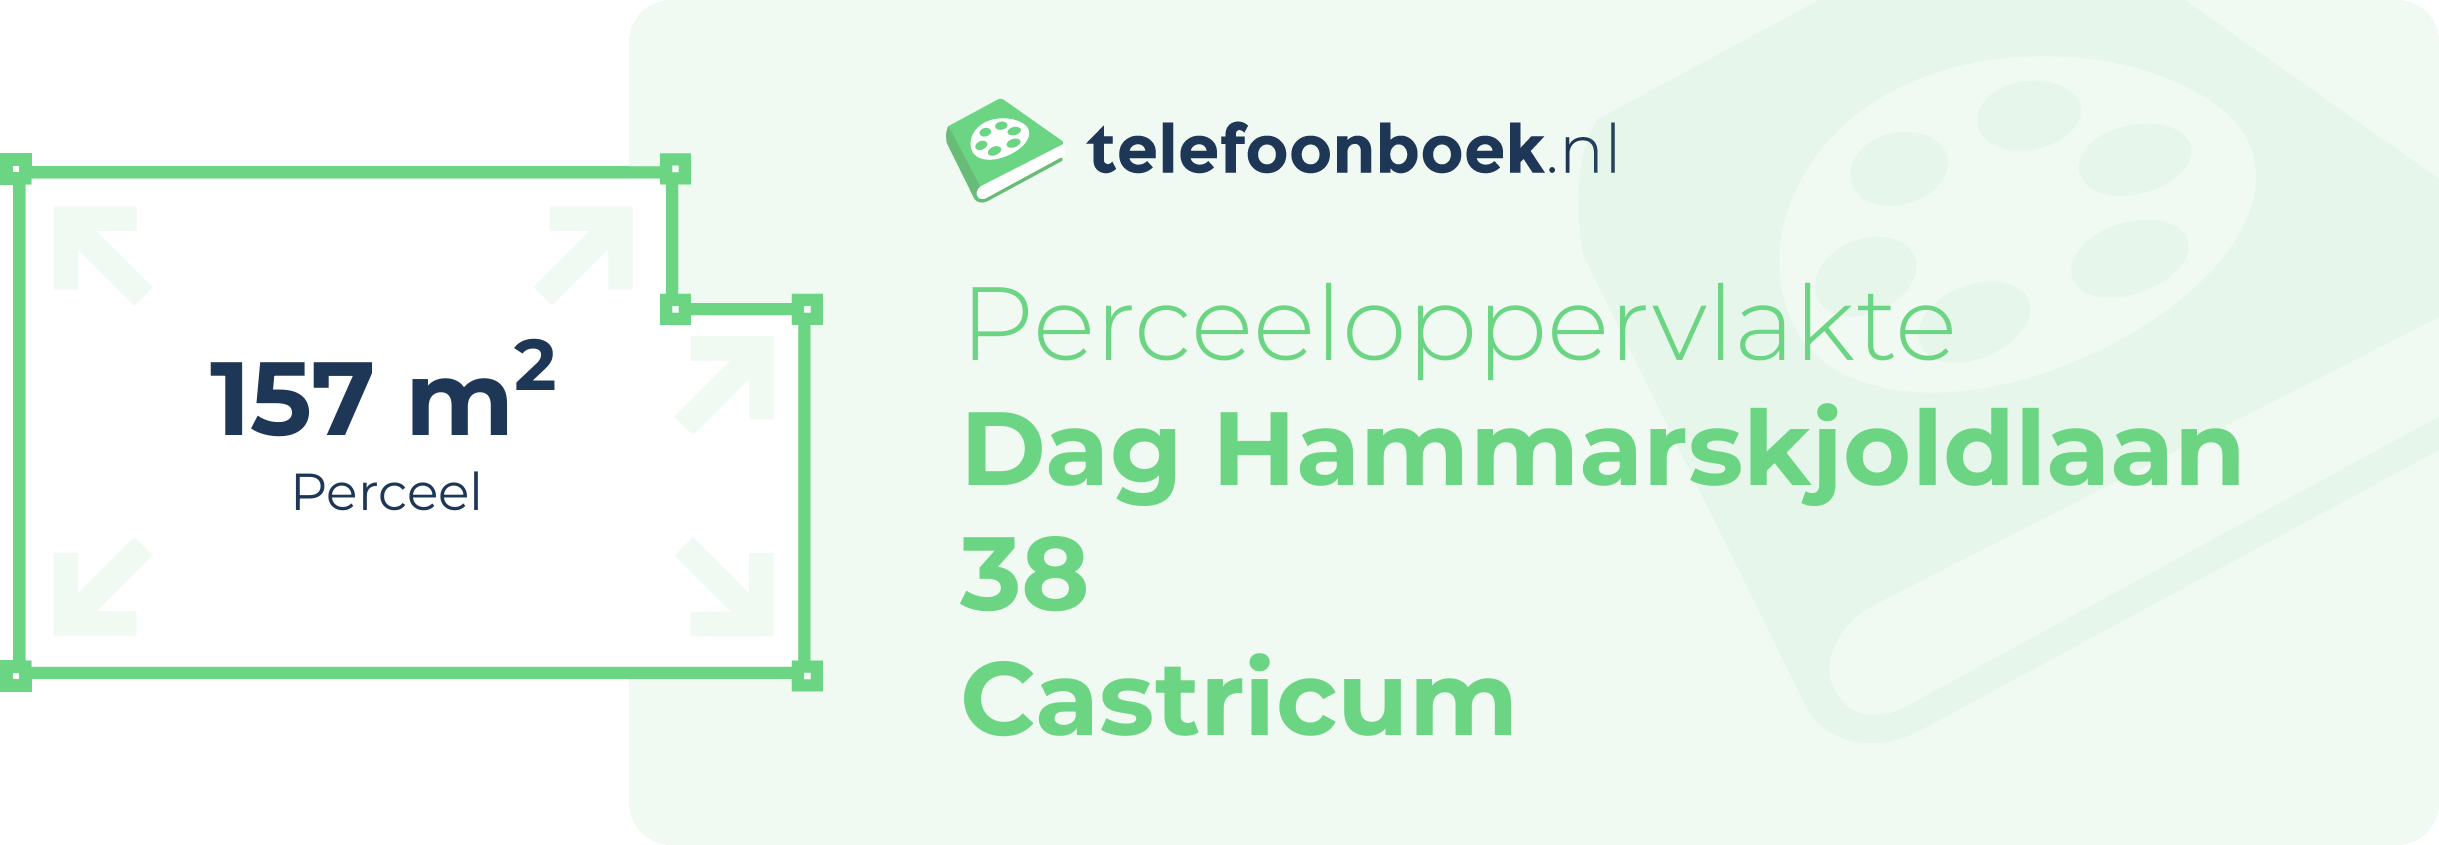 Perceeloppervlakte Dag Hammarskjoldlaan 38 Castricum